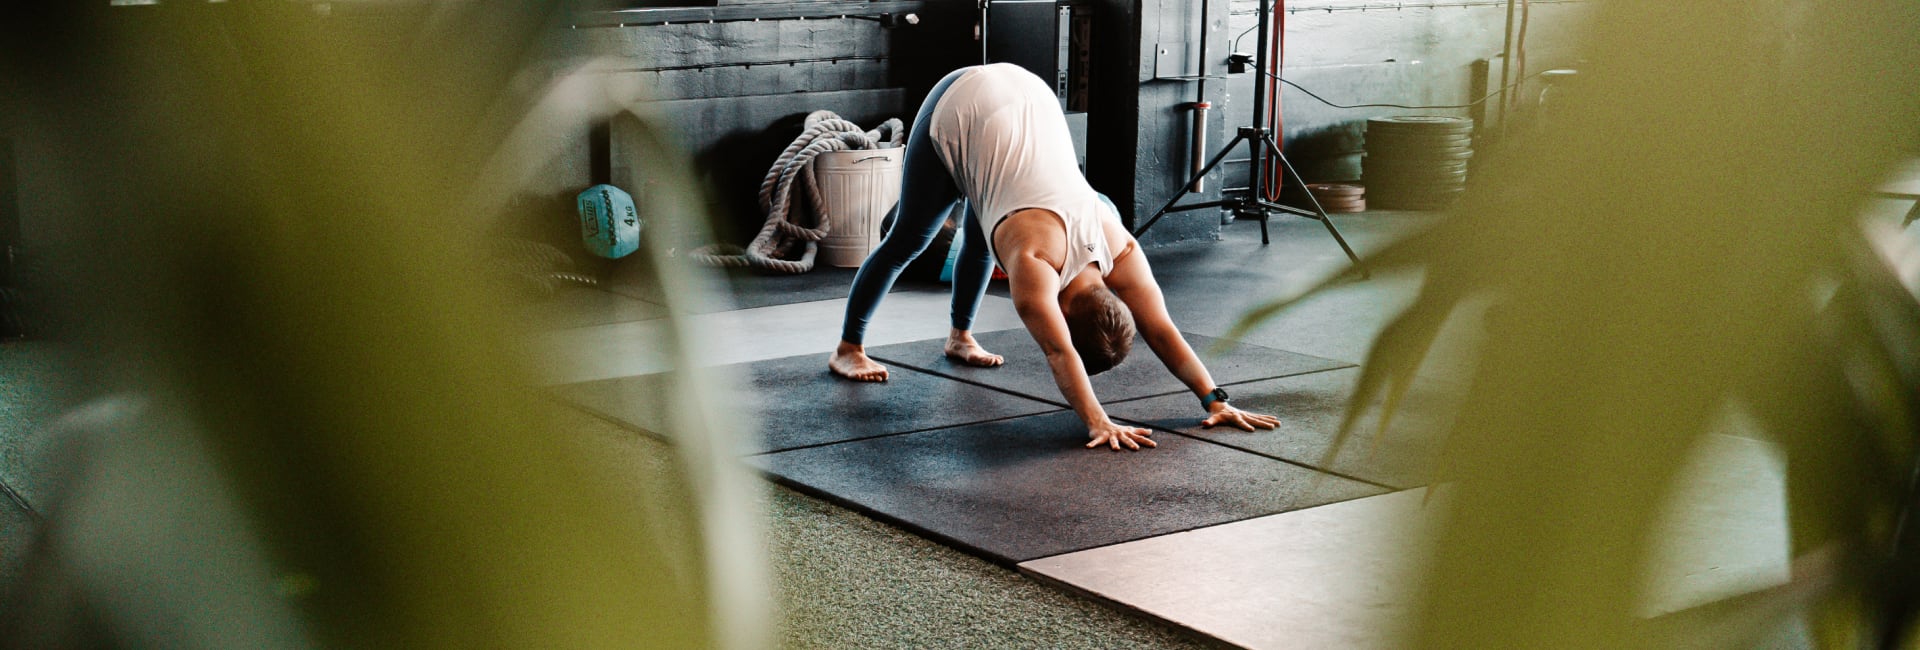 10 Reasons to Practice Restorative Yoga - DoYou